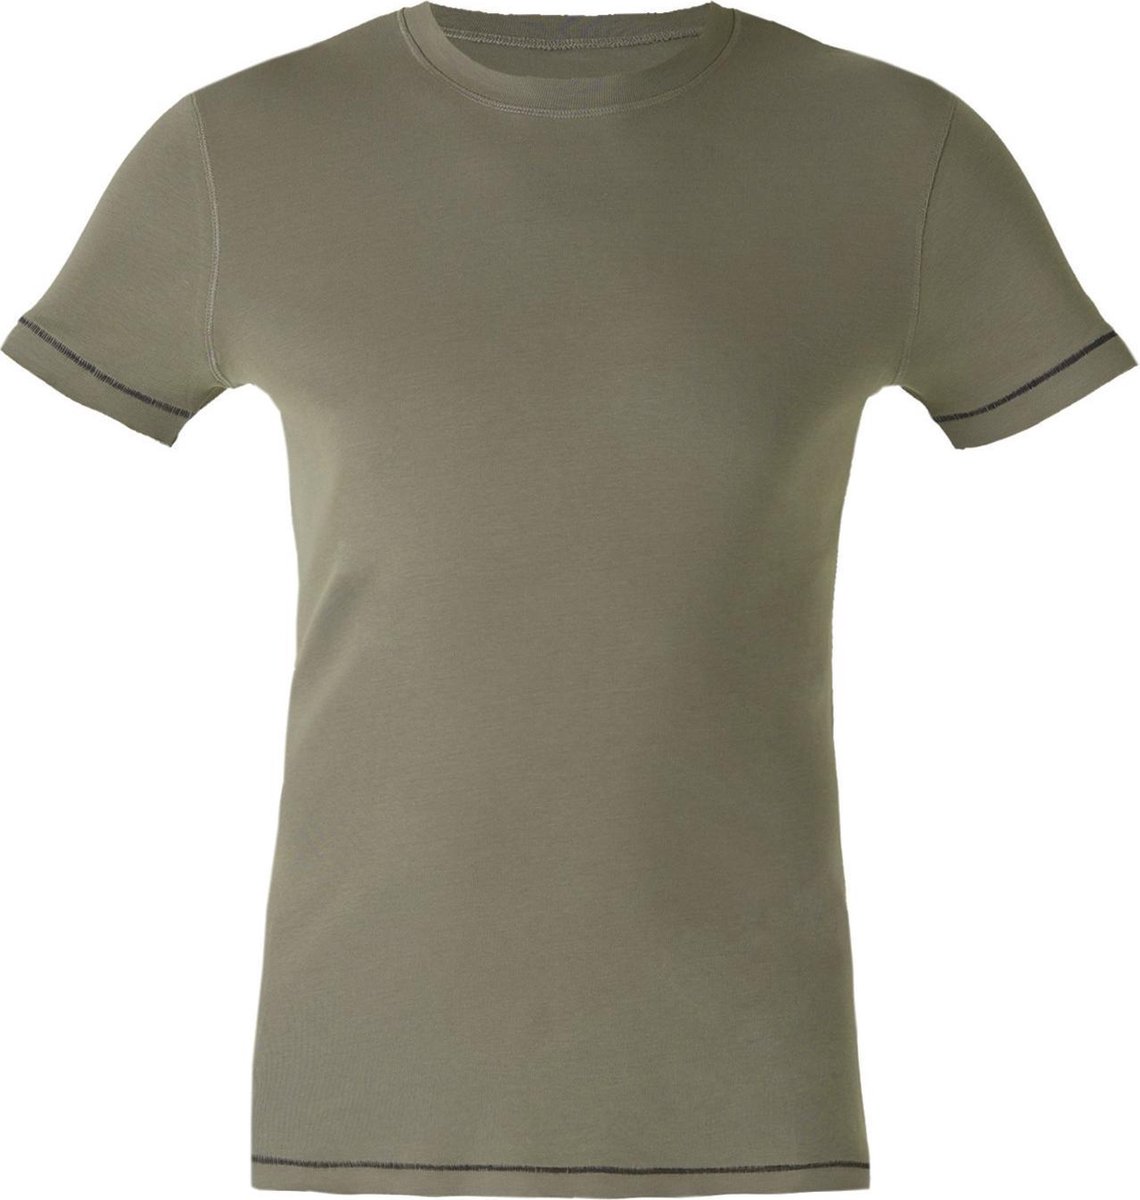 Yoga-T-Shirt "Oliver", olive L Loungewear shirt YOGISTAR